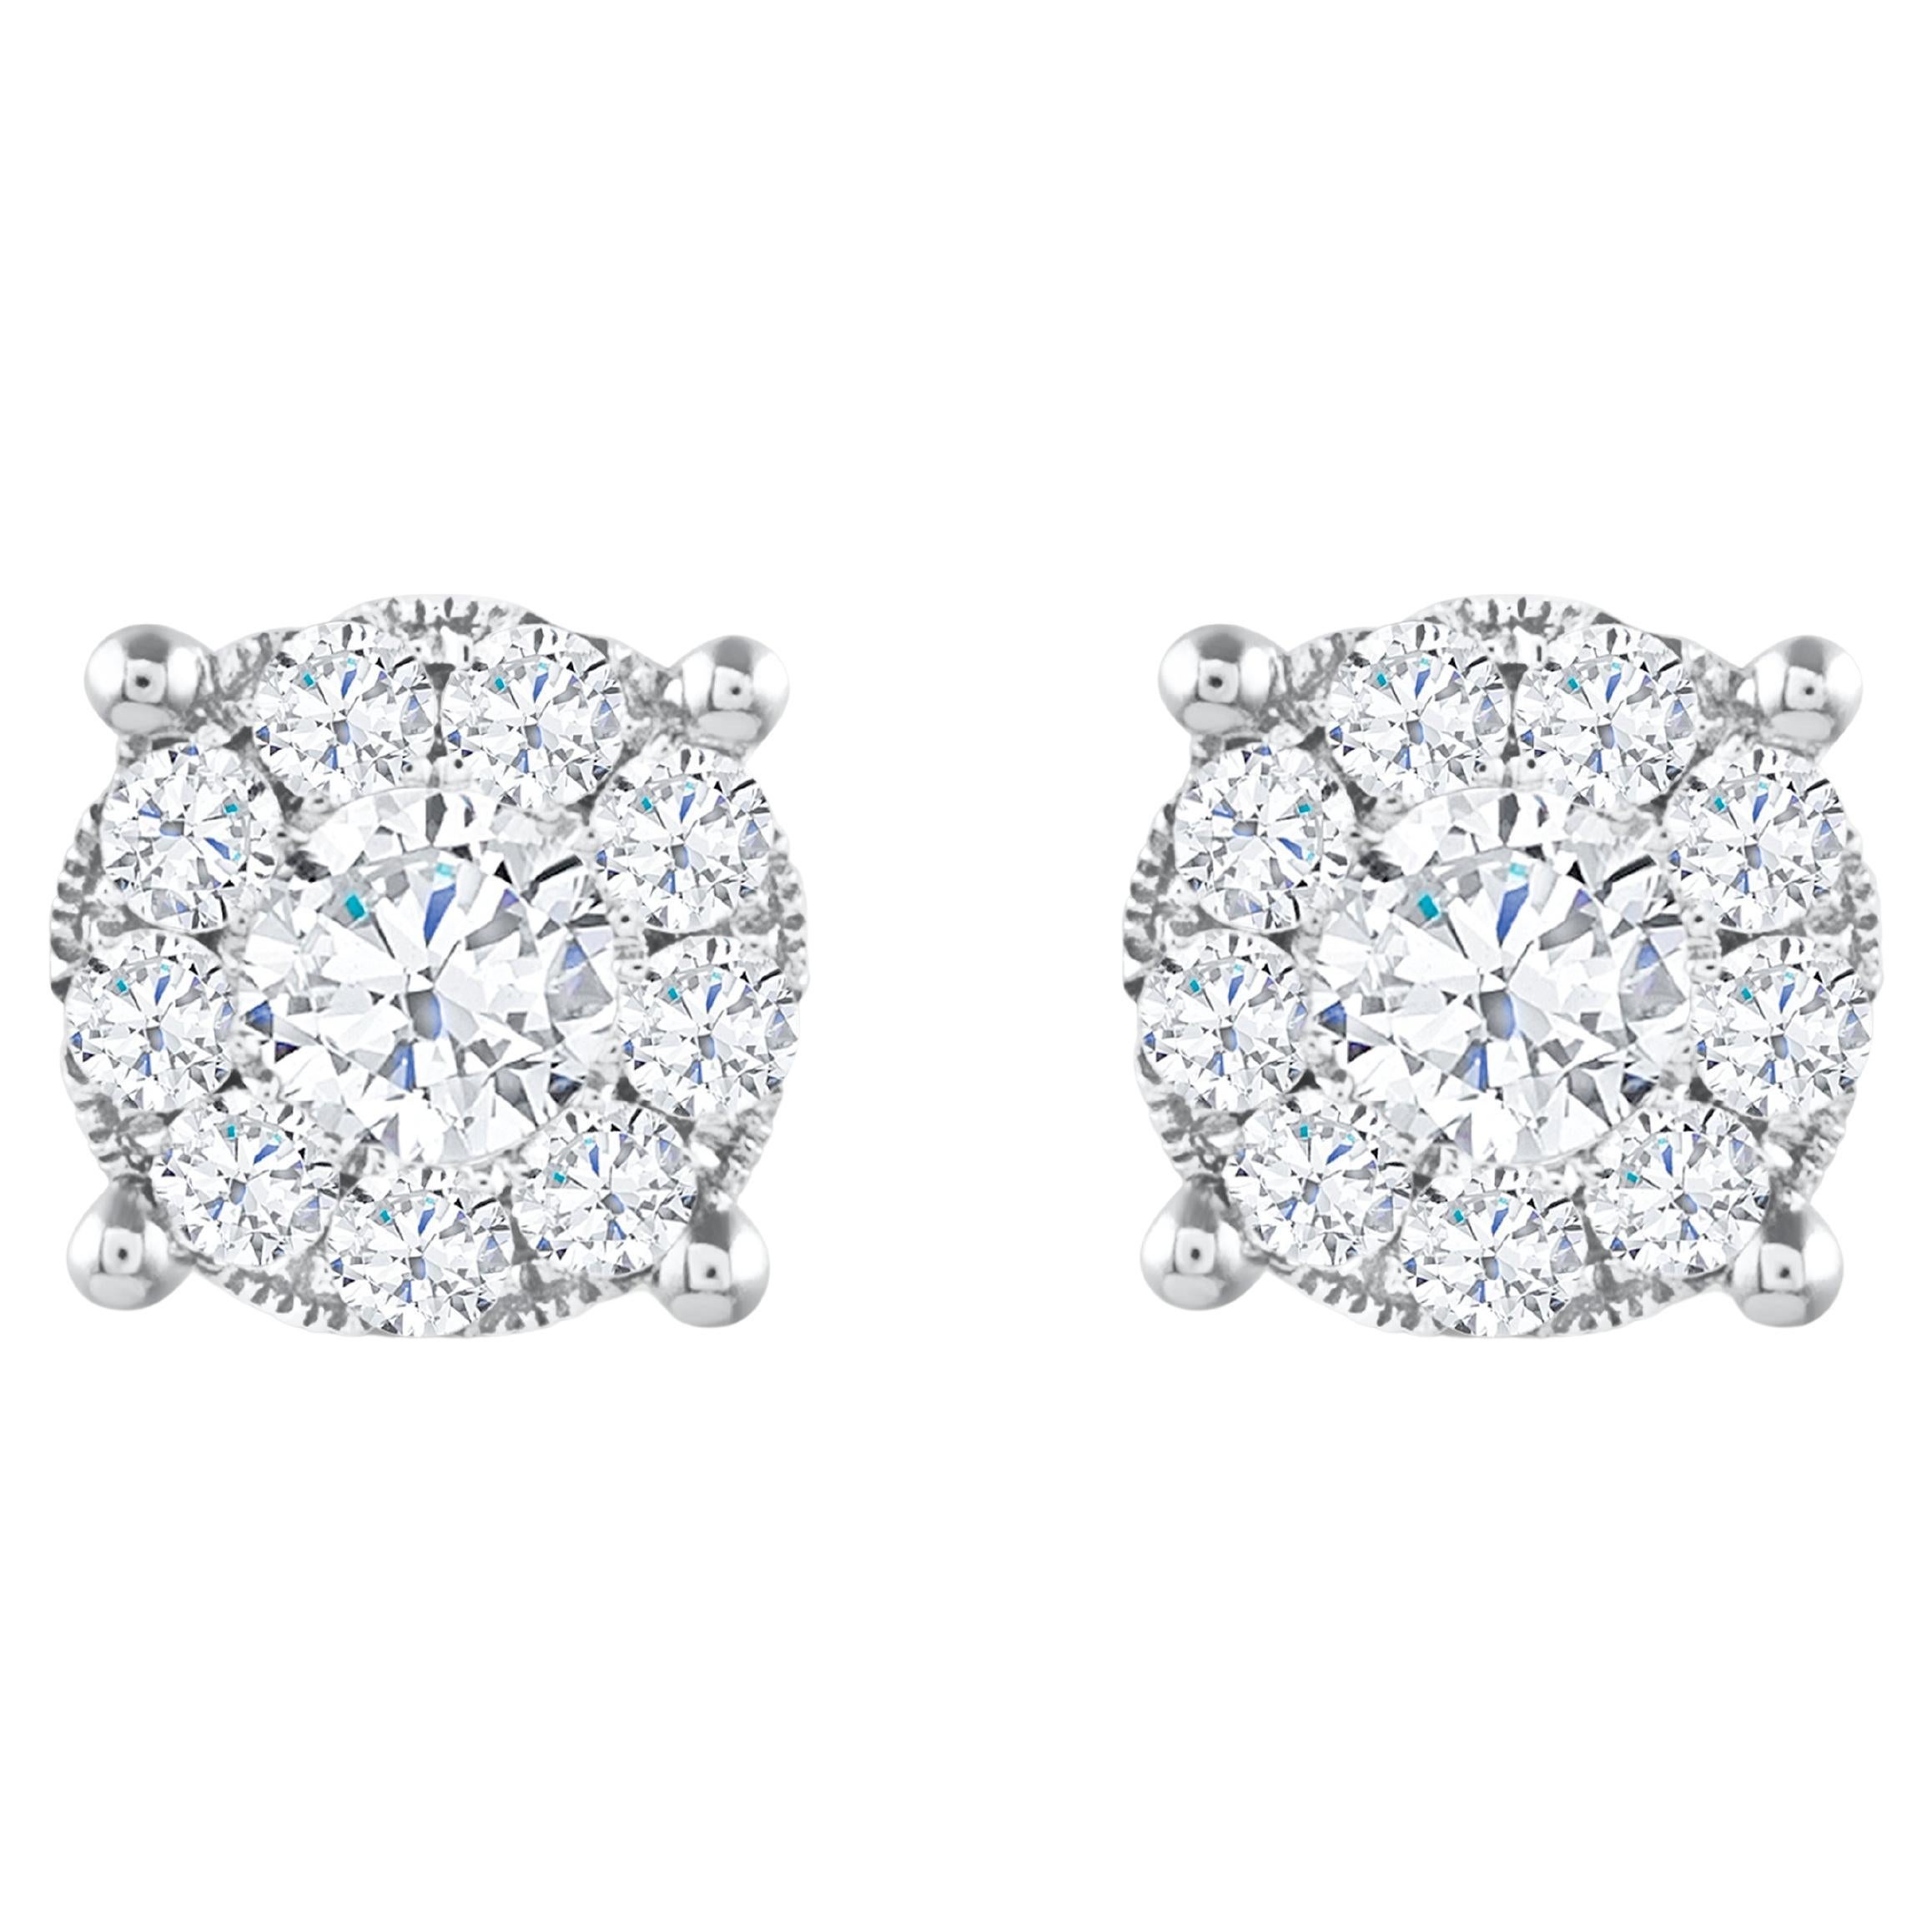 Roman Malakov 1.10 Carat Round Diamond Cluster Stud Earring